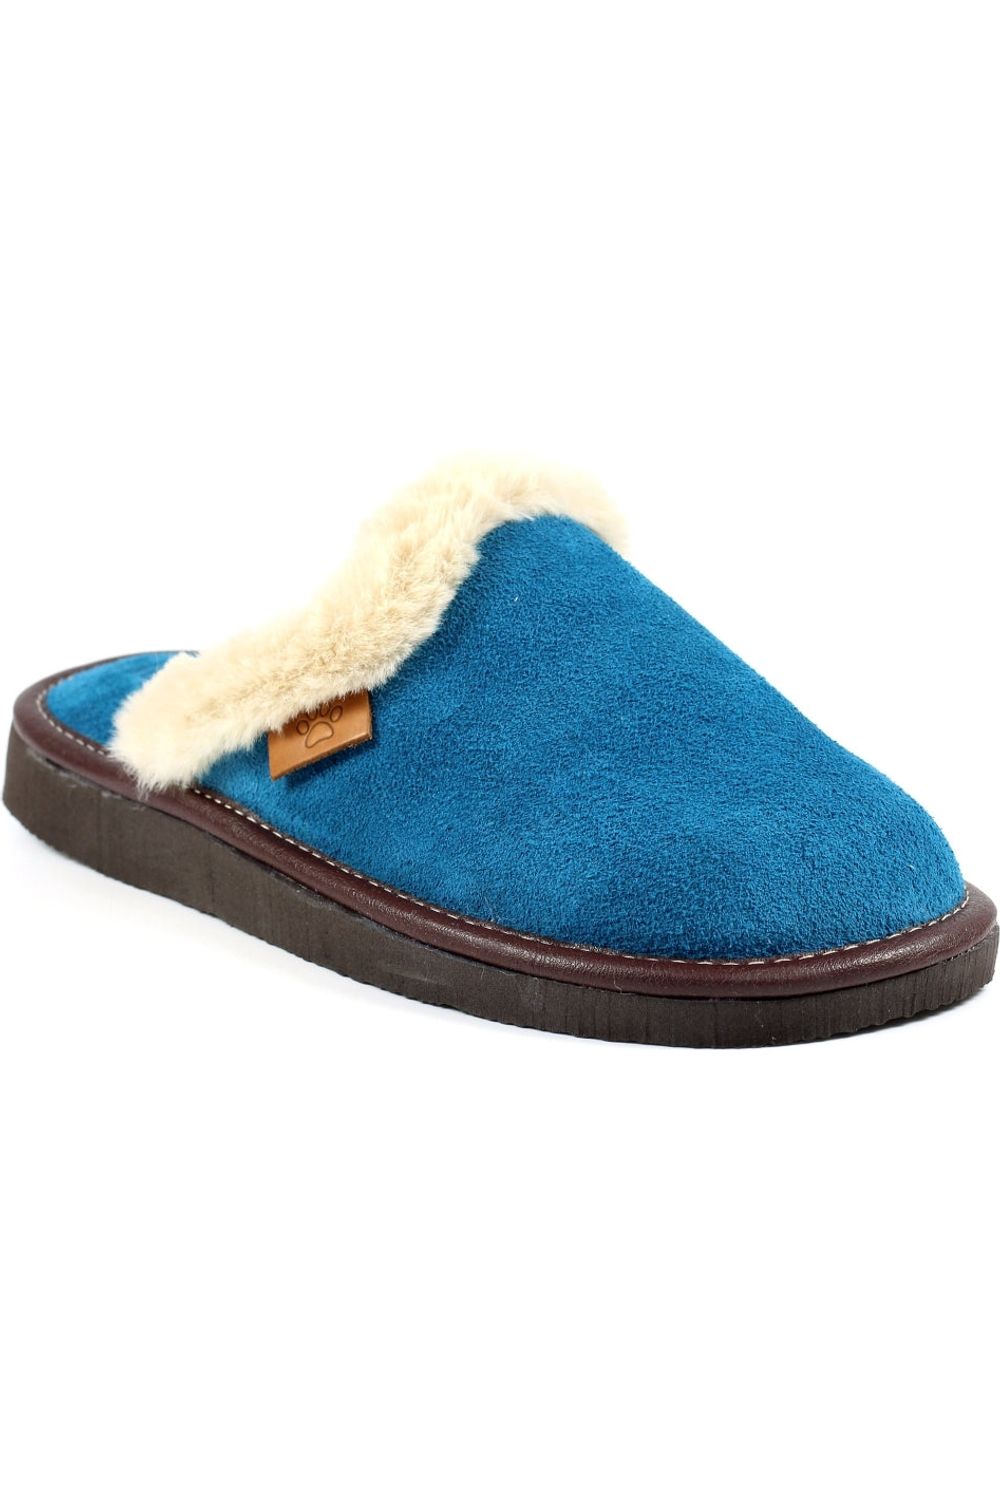 Lunar KLD 467 Lazy Dogz Otto Mule slipper in blue